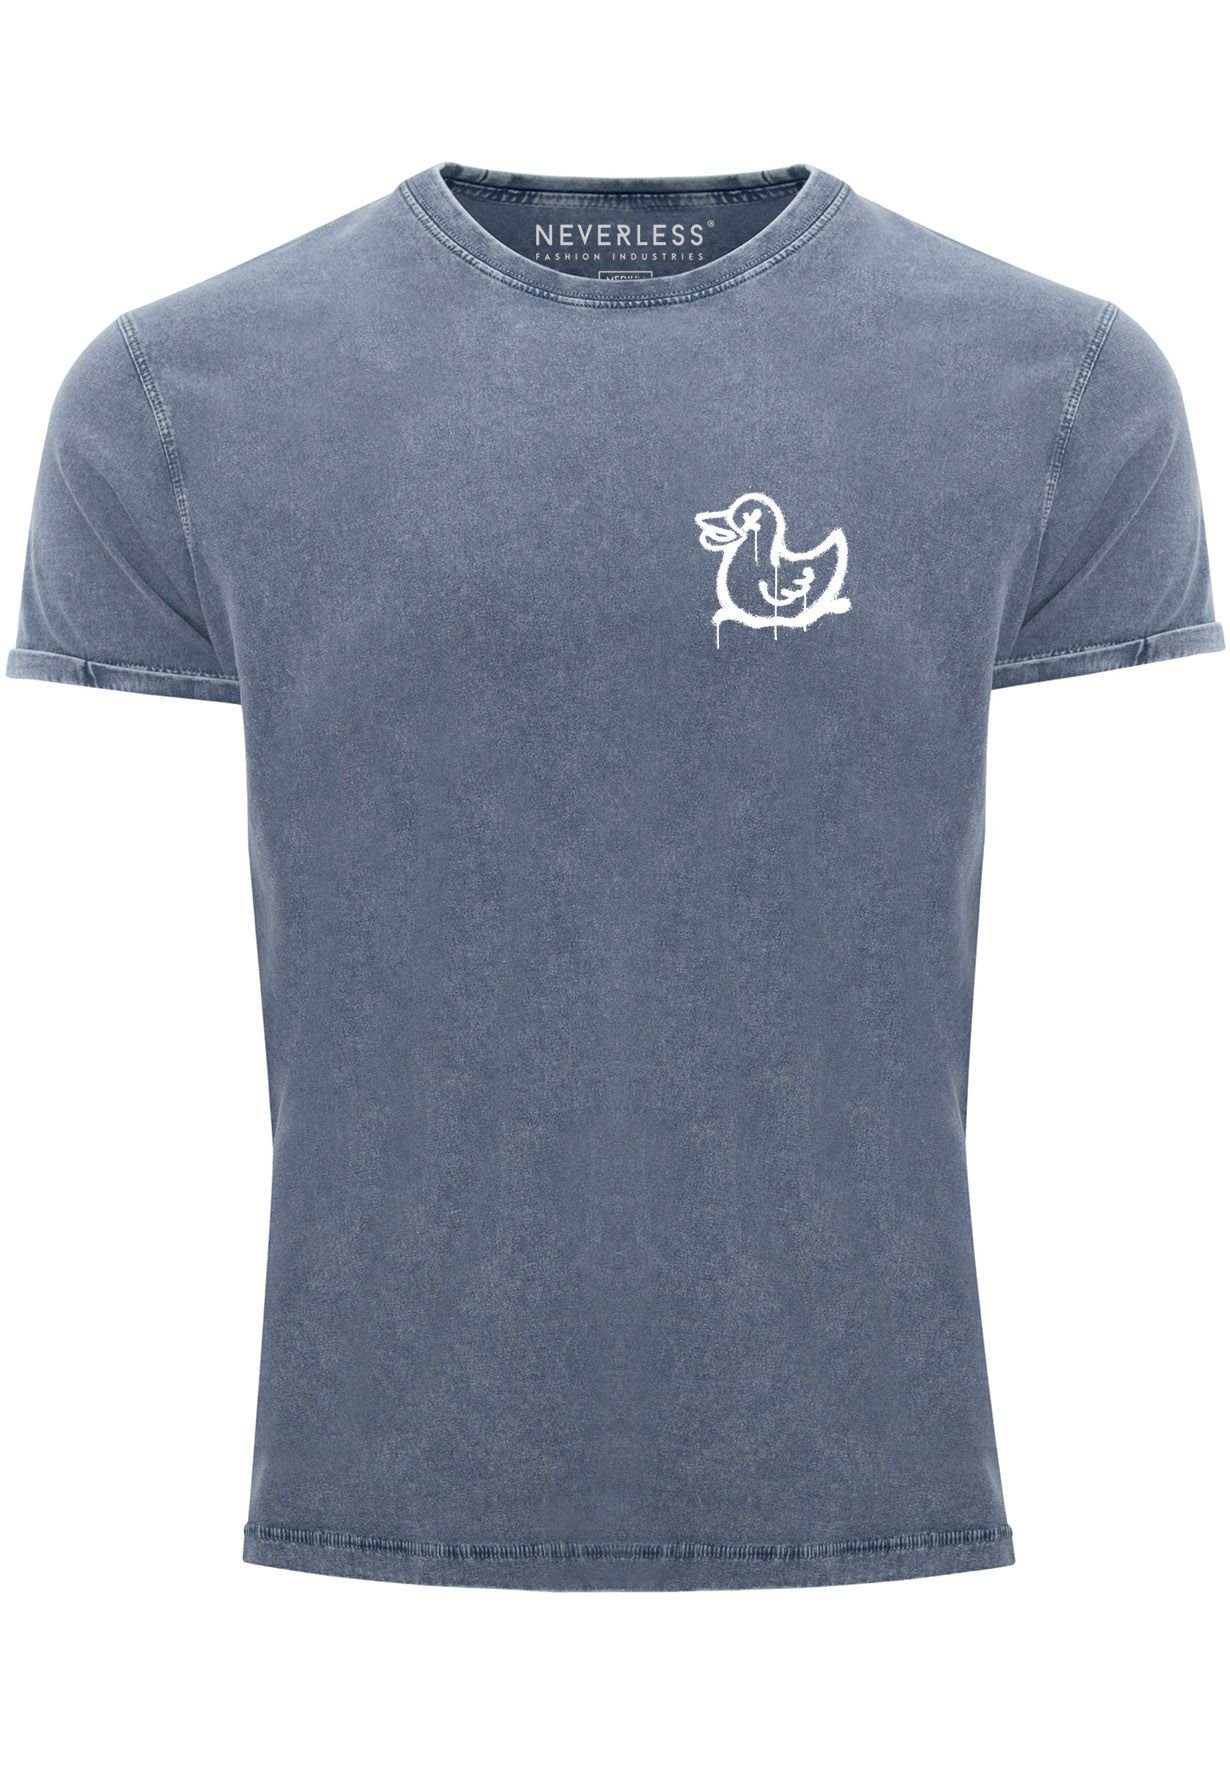 Neverless Print-Shirt Herren Vintage Shirt Drippy Duck Ente Graffiti Style Printshirt T-Shir mit Print blau